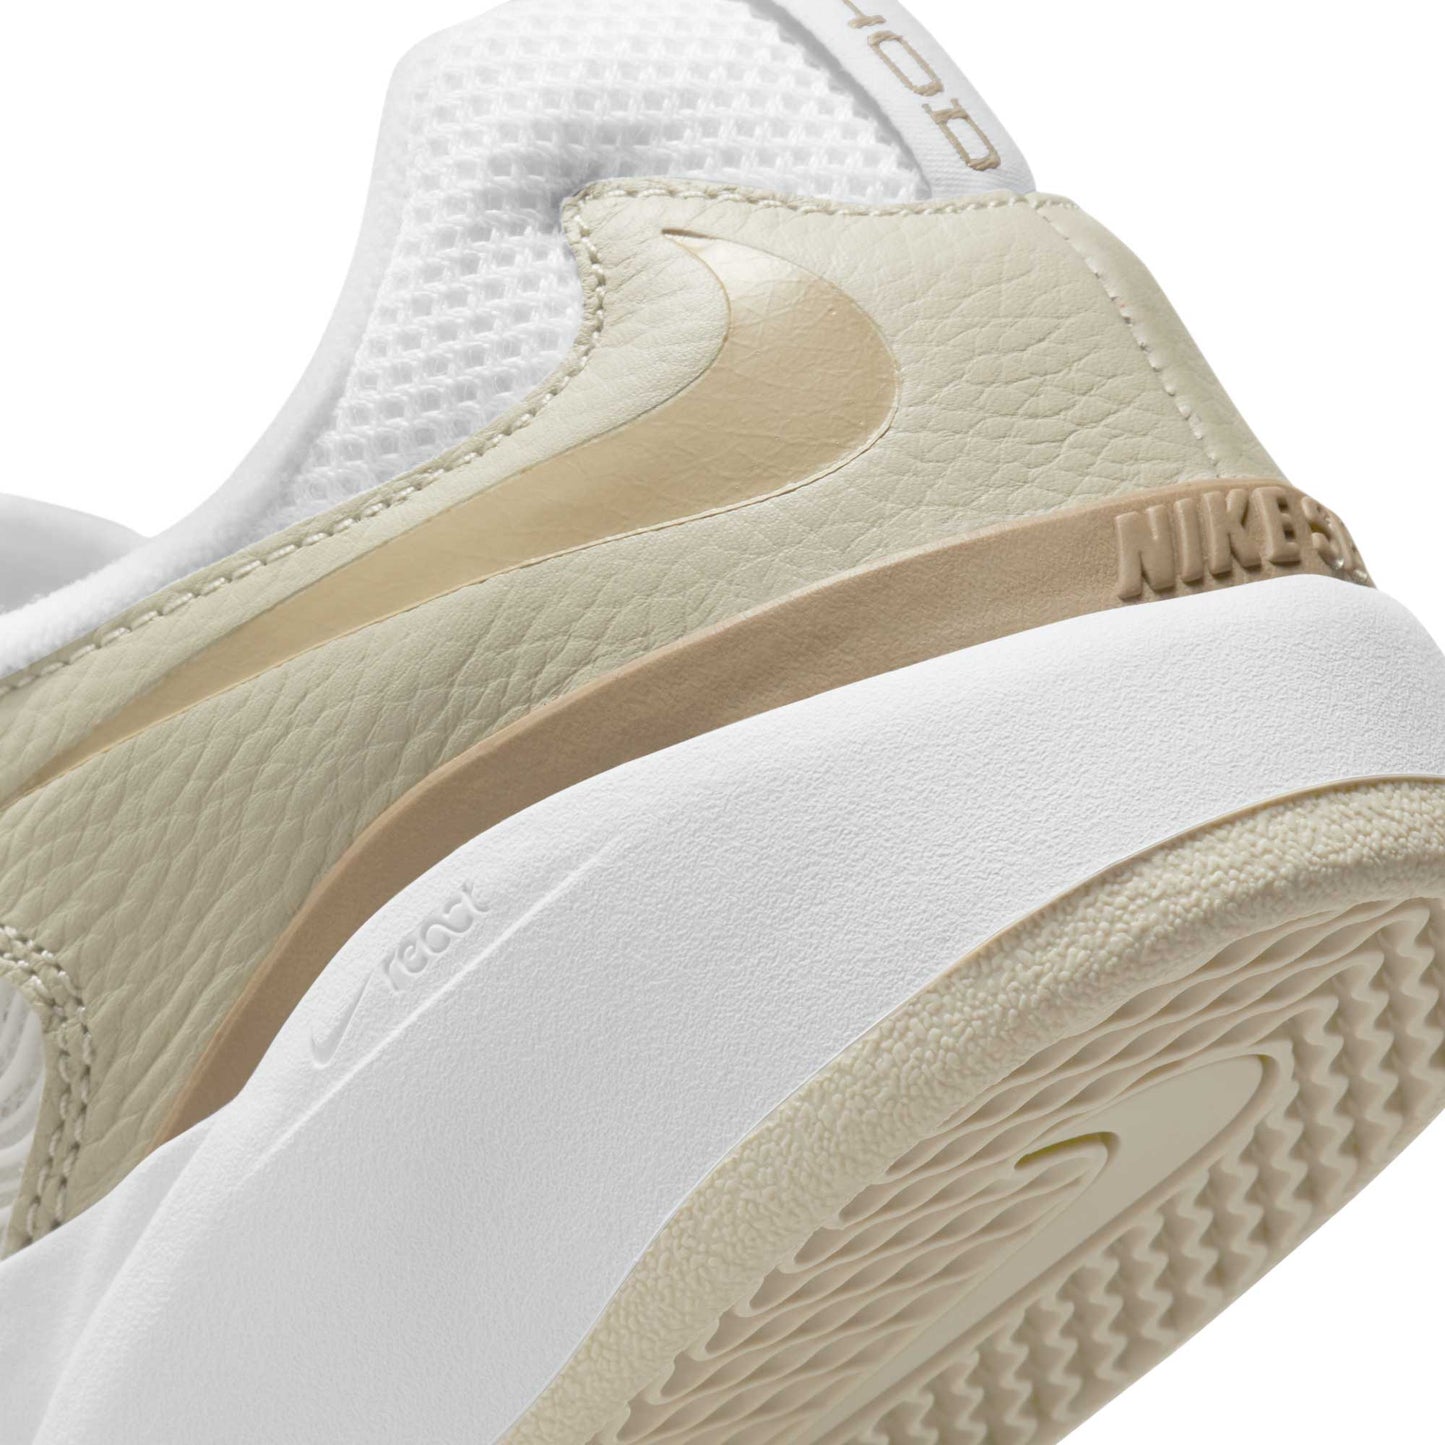 Nike SB Ishod Wair Premium, light stone/khaki-summit white-white - Tiki Room Skateboards - 10